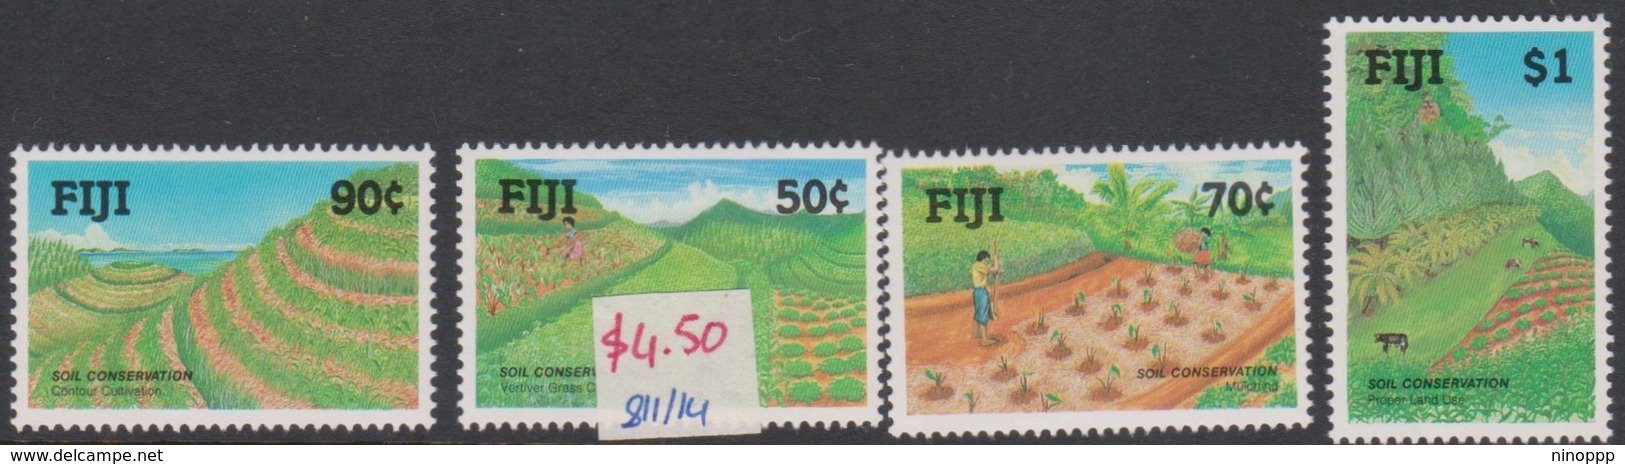 Fiji SG 811-814 1990 Soil Conservation, Mint Never Hinged - Fiji (1970-...)